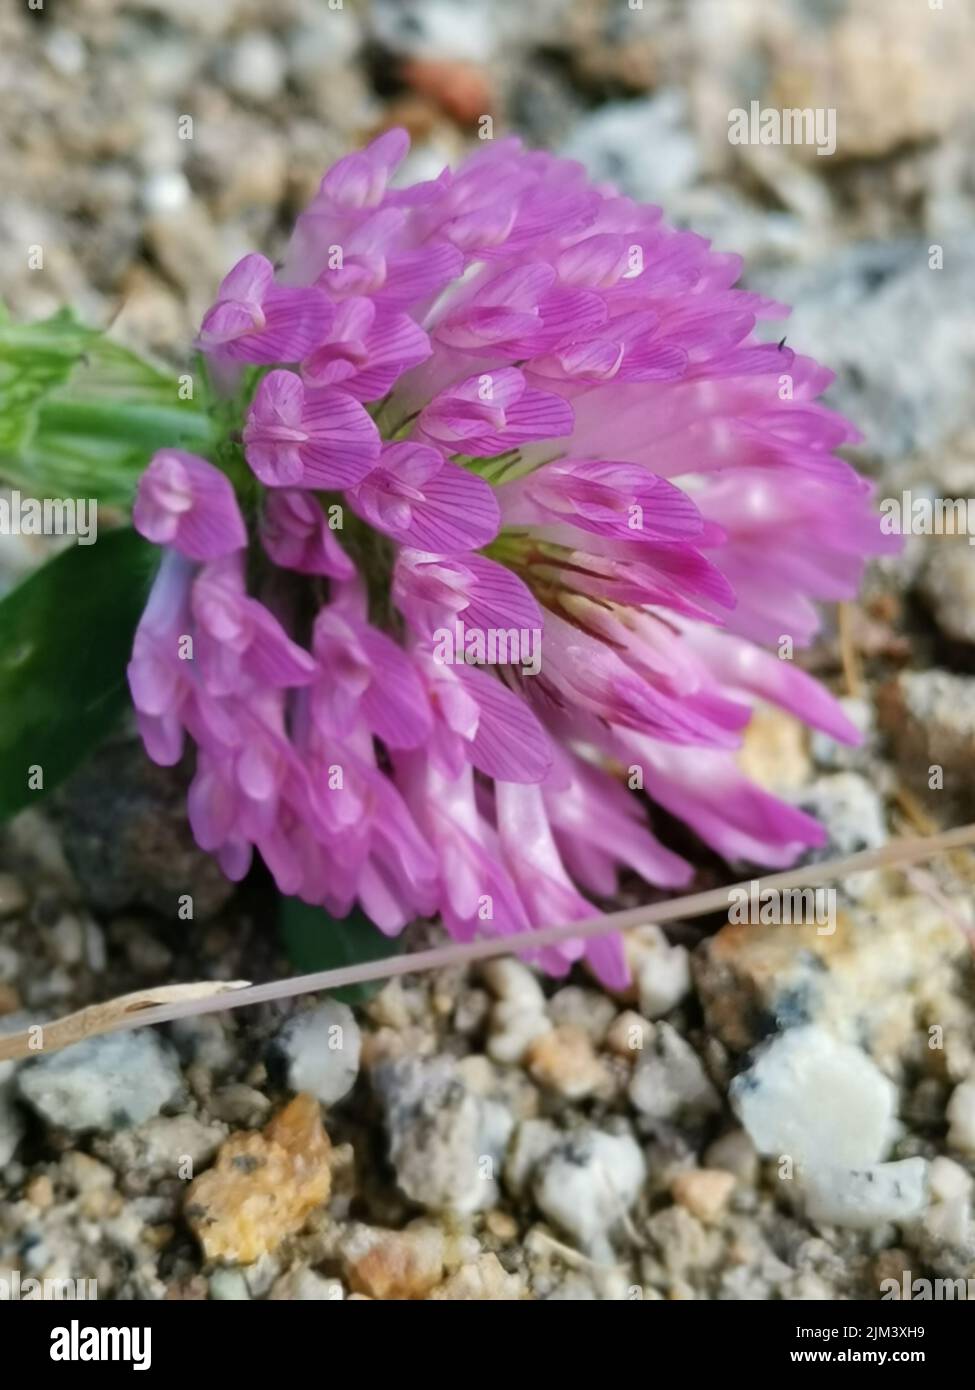 A closeup shot of a Clover or trefoil flower Stock Photo